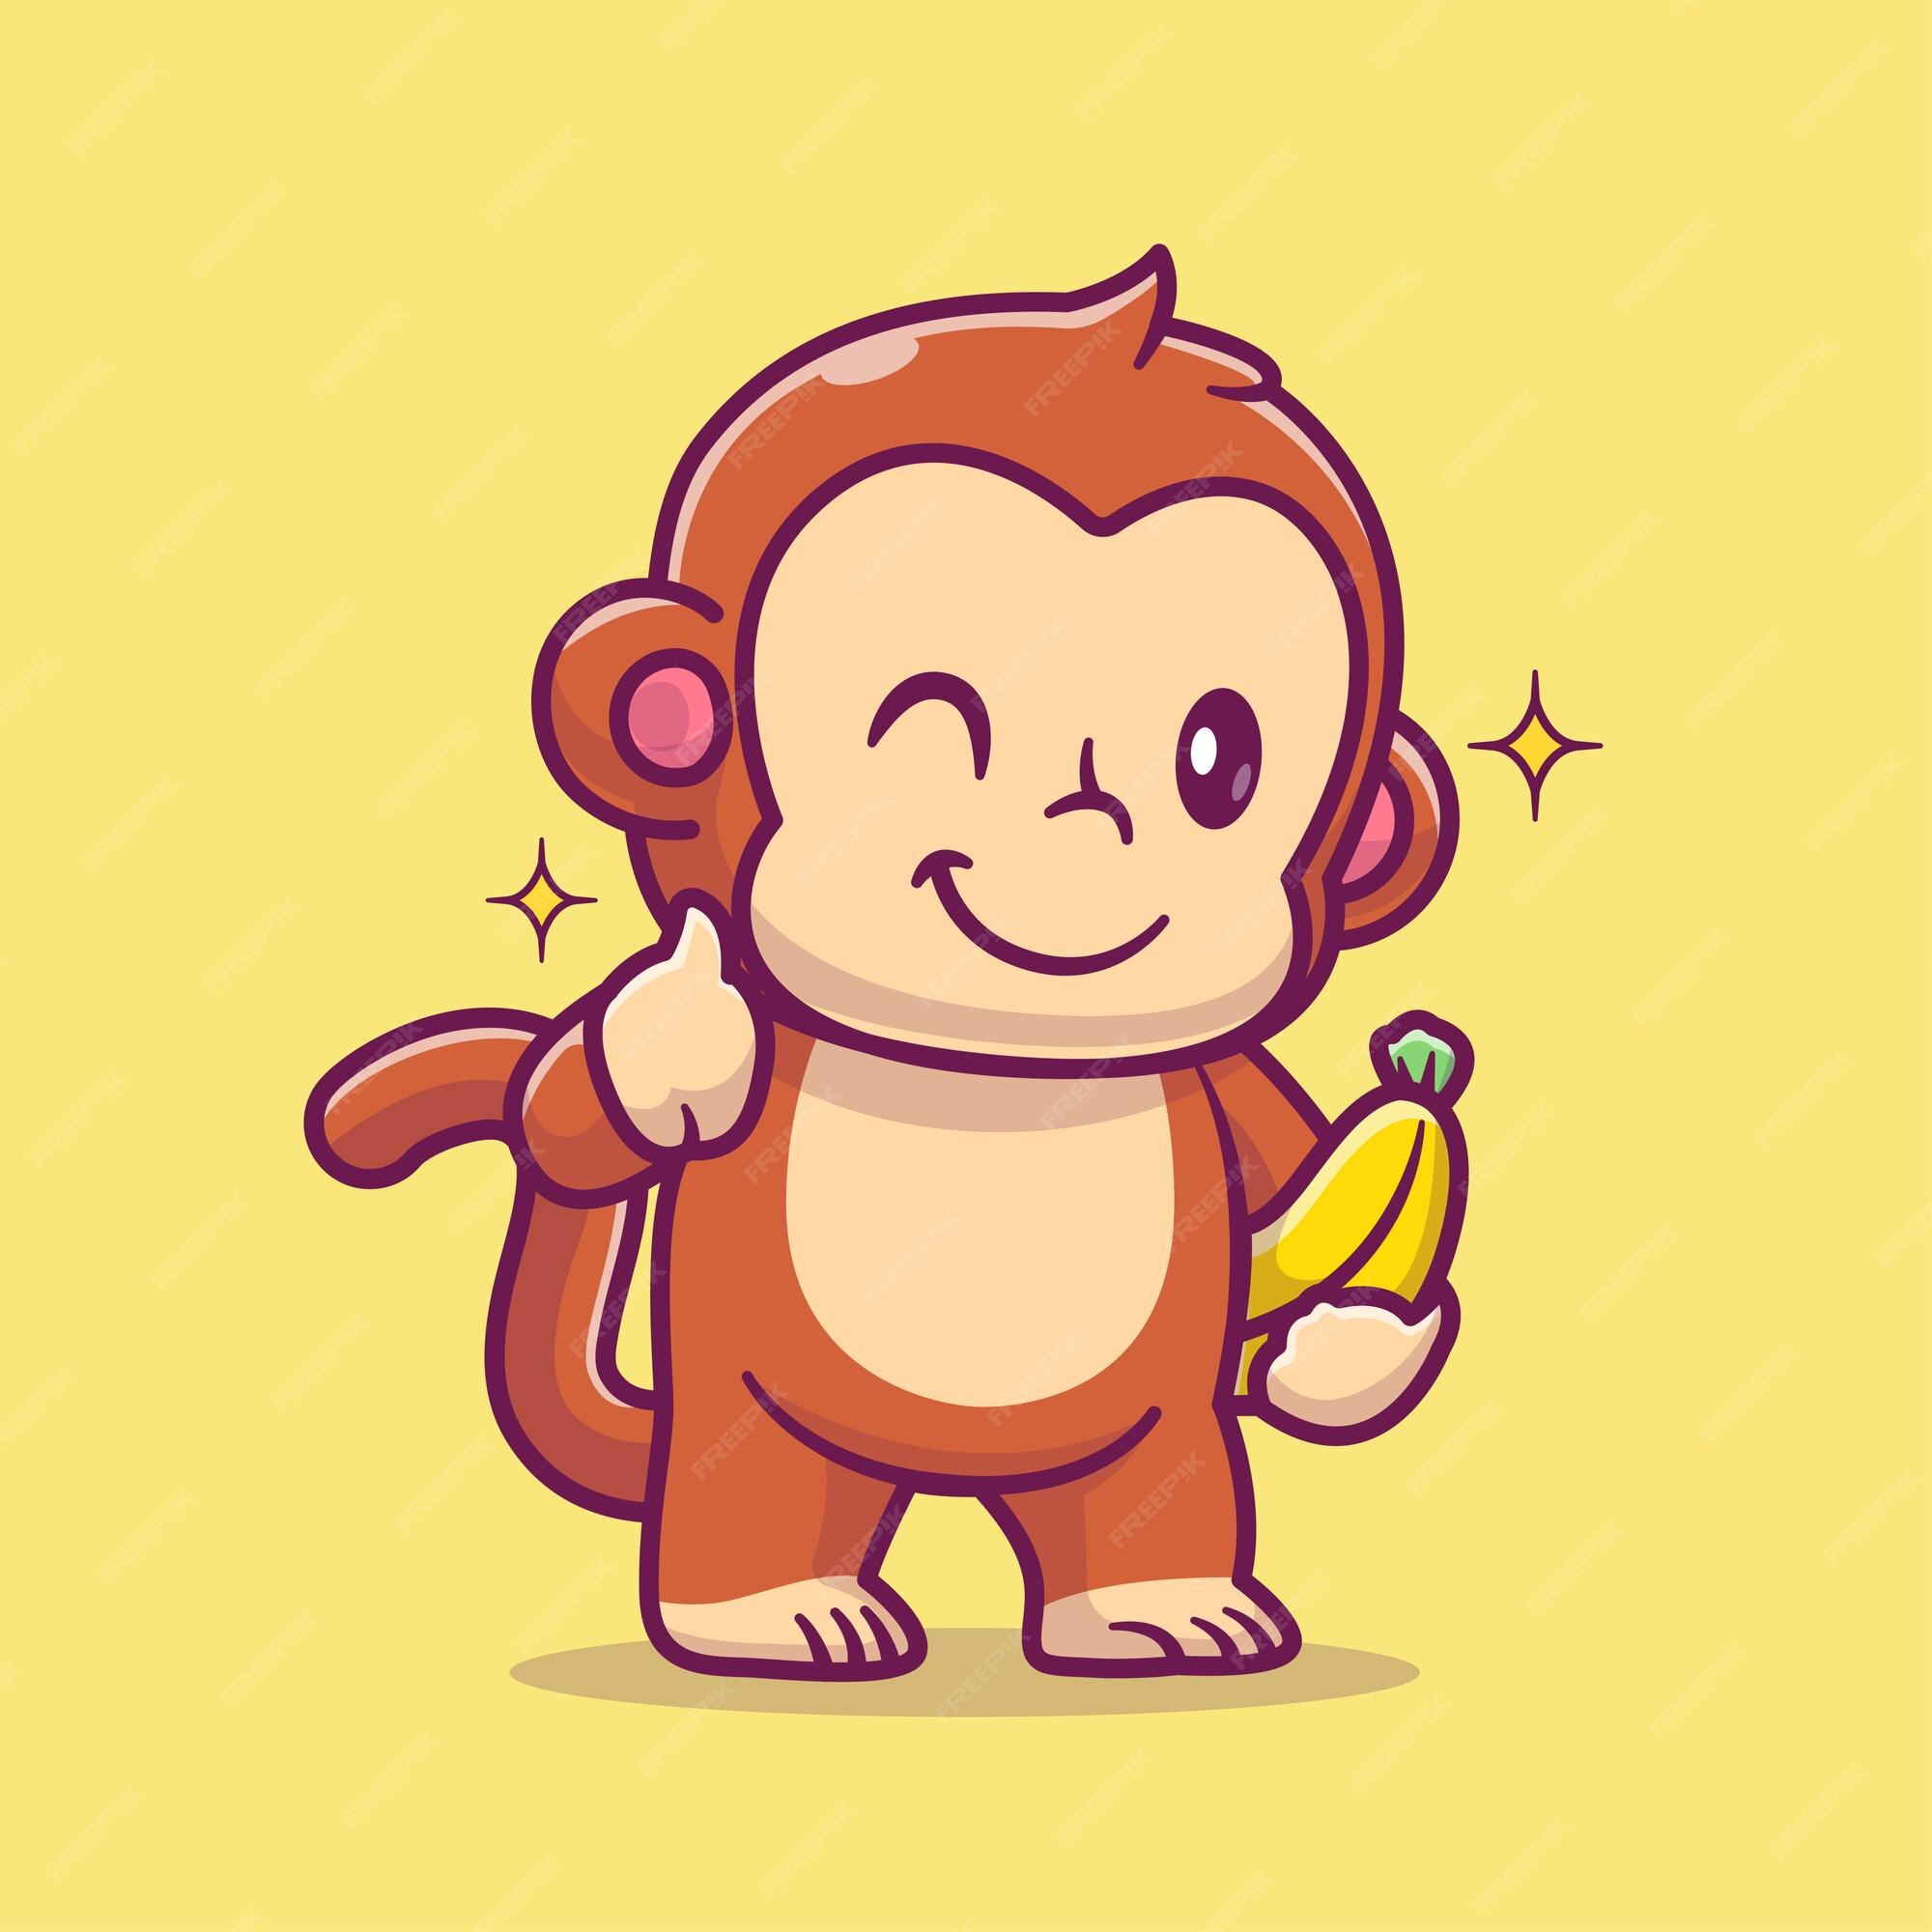 Monkey Cartoon Images - Free Download on Freepik